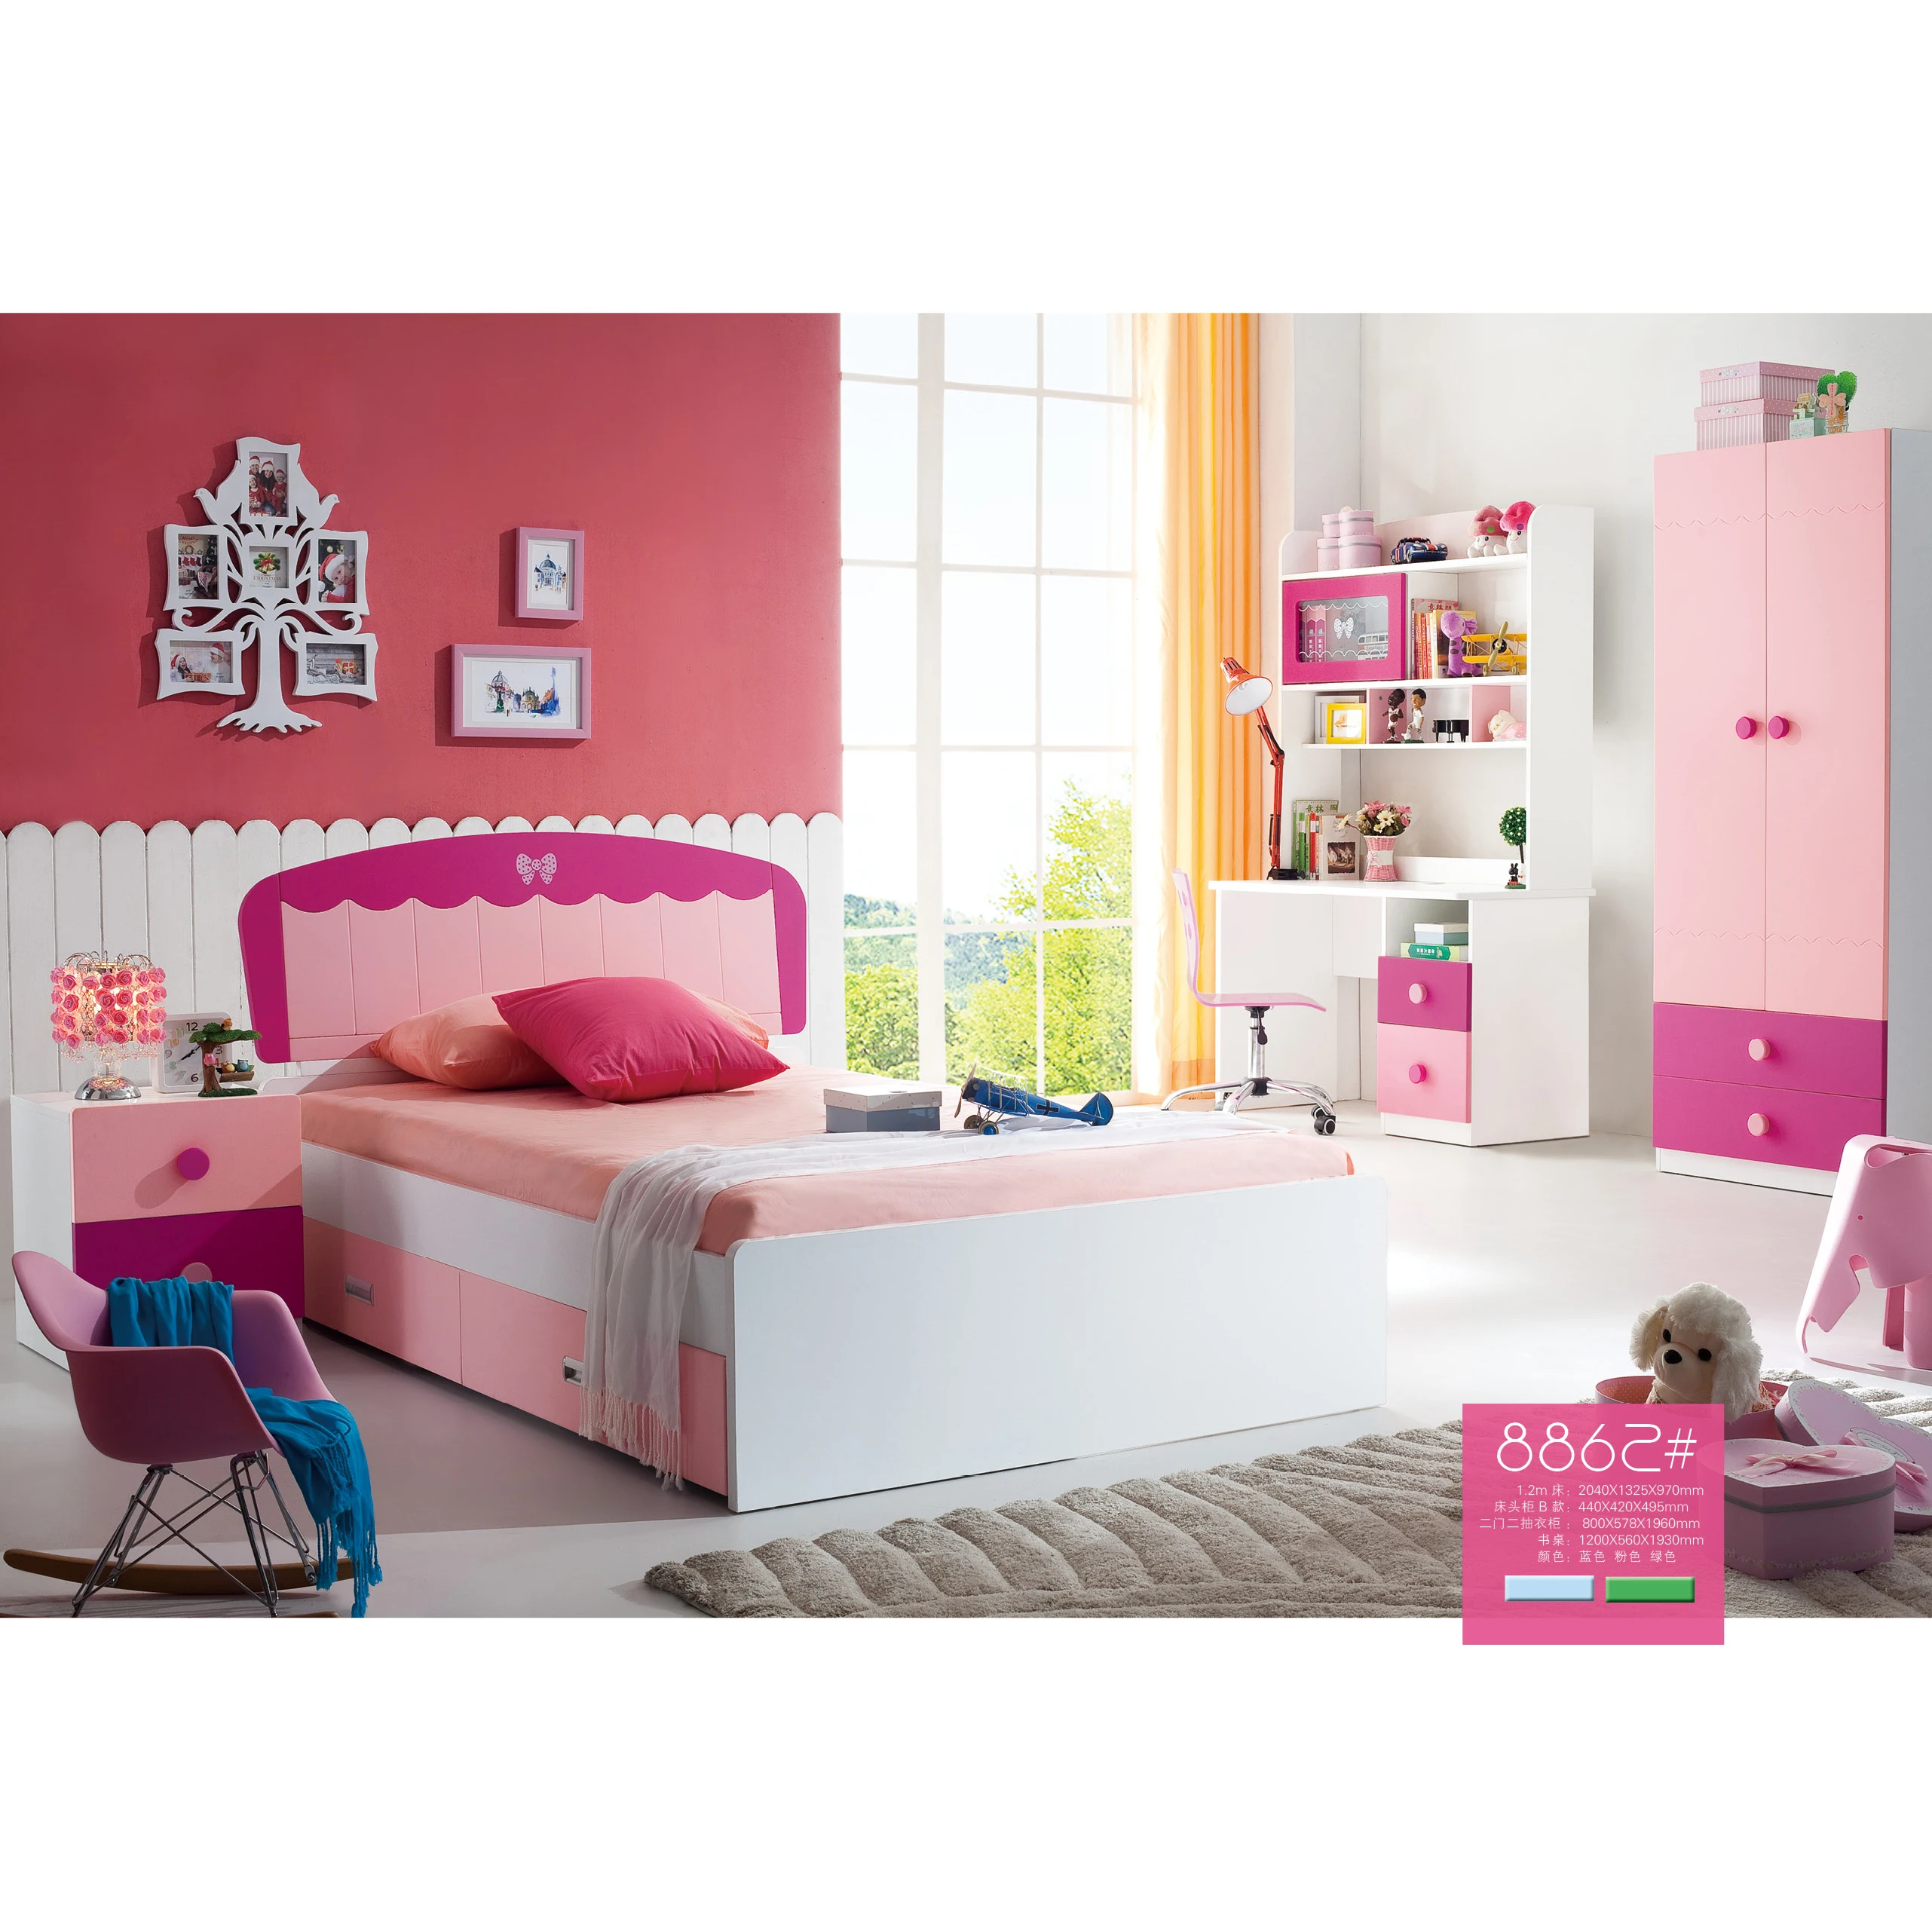 Unique Kids Bedroom Sets Pink Bedroom Furniture For Girls Buy Pink Bedroom Furniture For Girls Unique Kids Bedroom Sets Kids Bedroom Sets Product On Alibaba Com